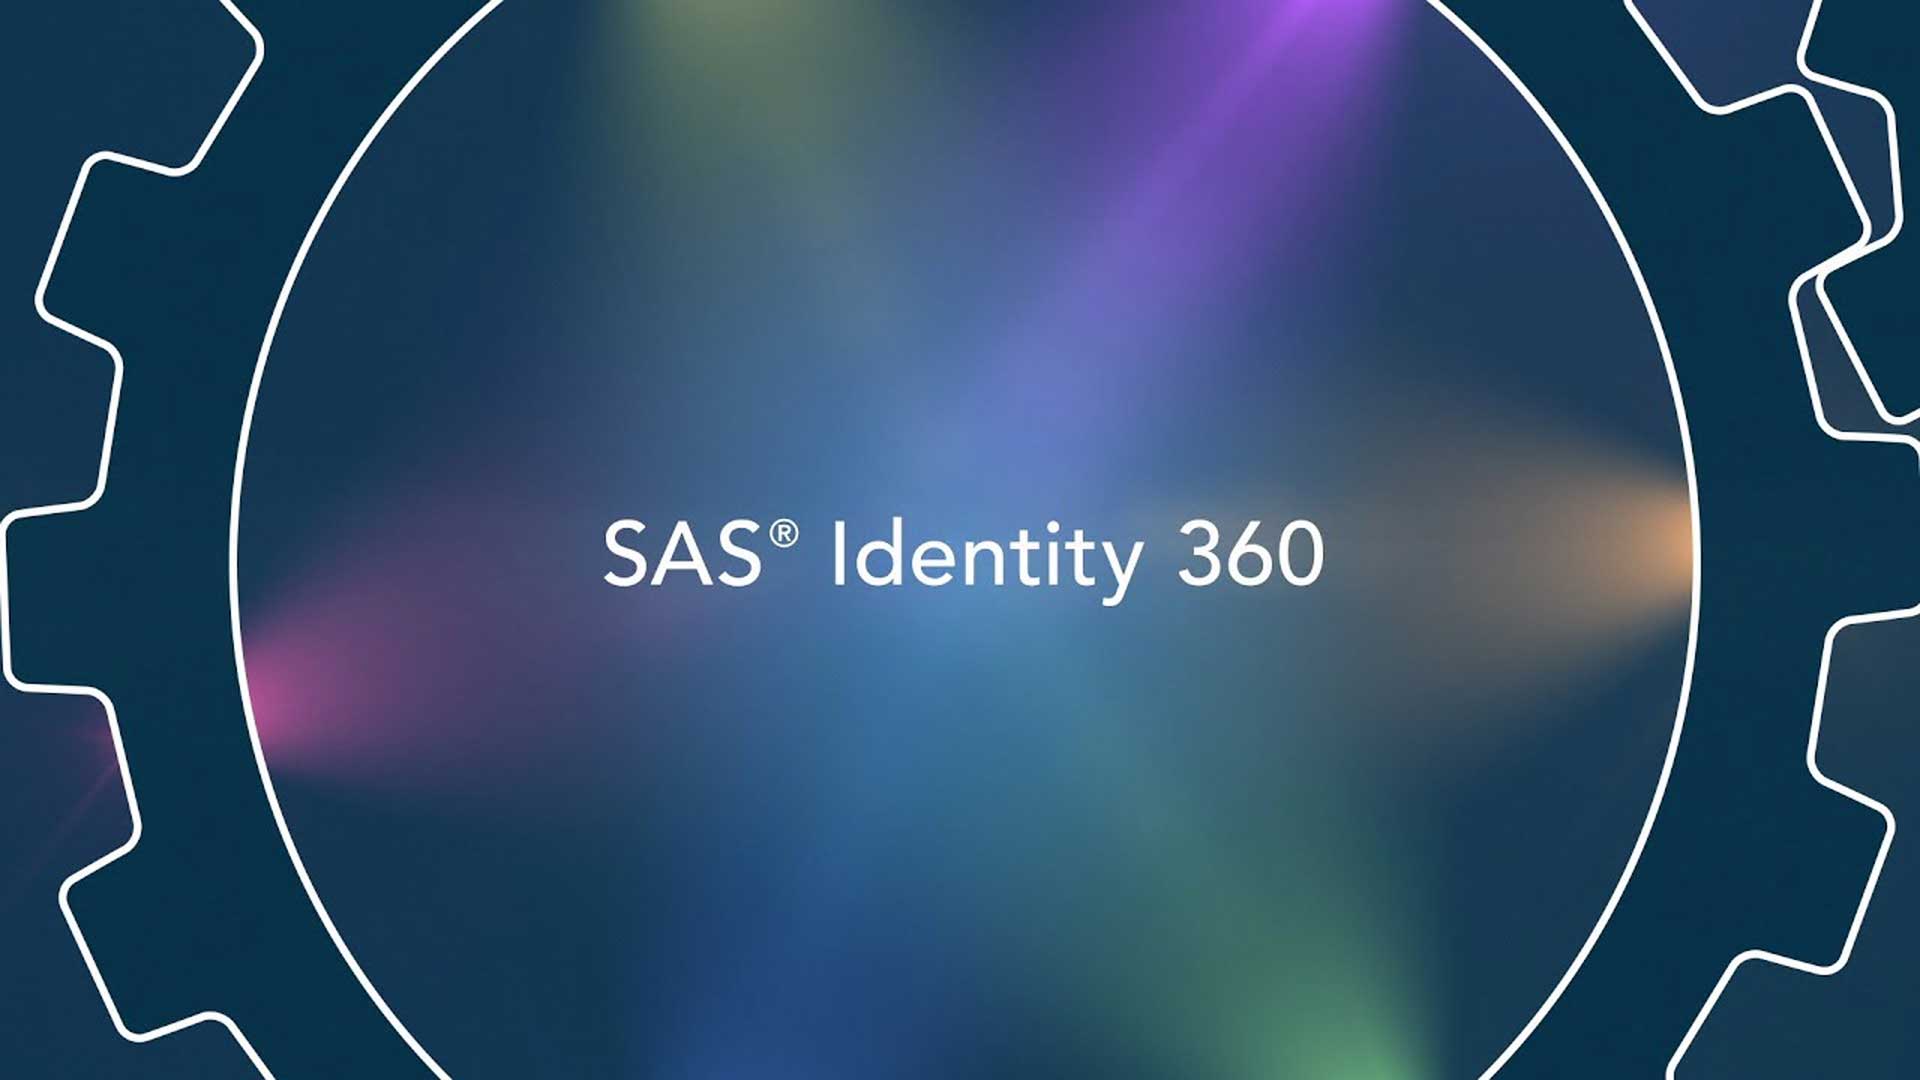 SAS Identity 360 | Identity Theft Protection Across the Customer Journey